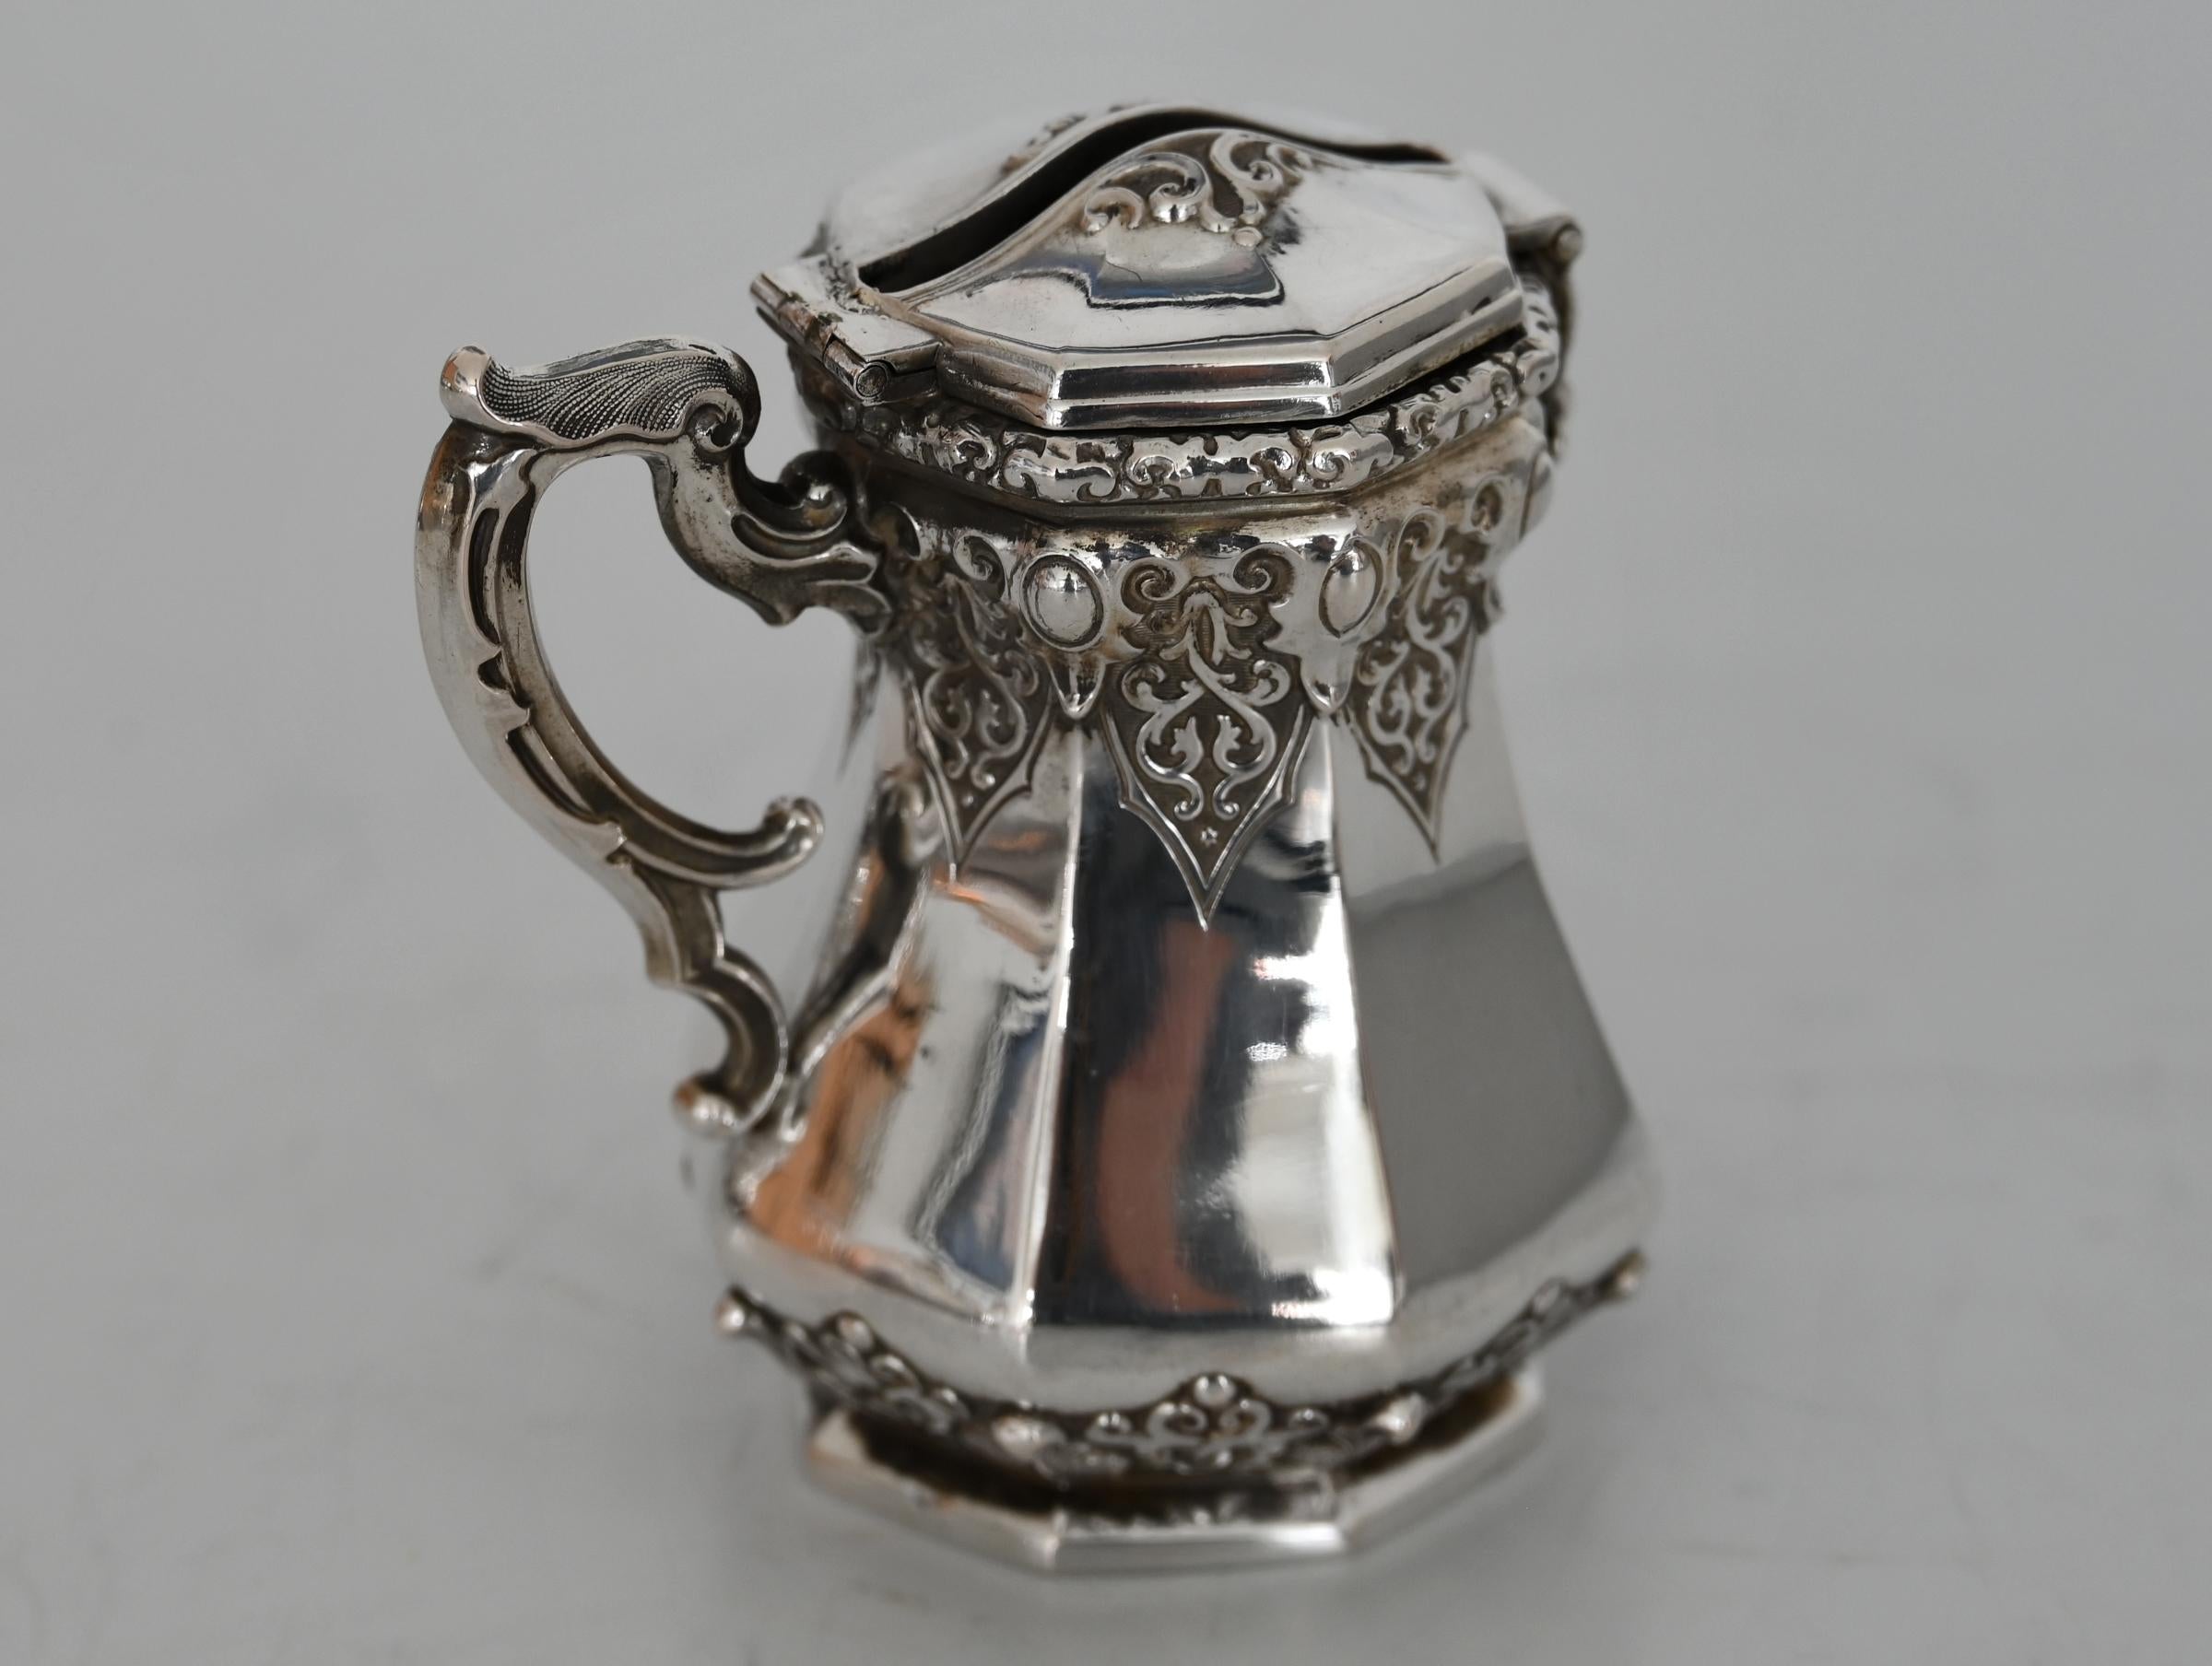 19th Century Savings Box Biedermeier Period German Silver 13 Lot In Good Condition For Sale In Epfach, DE